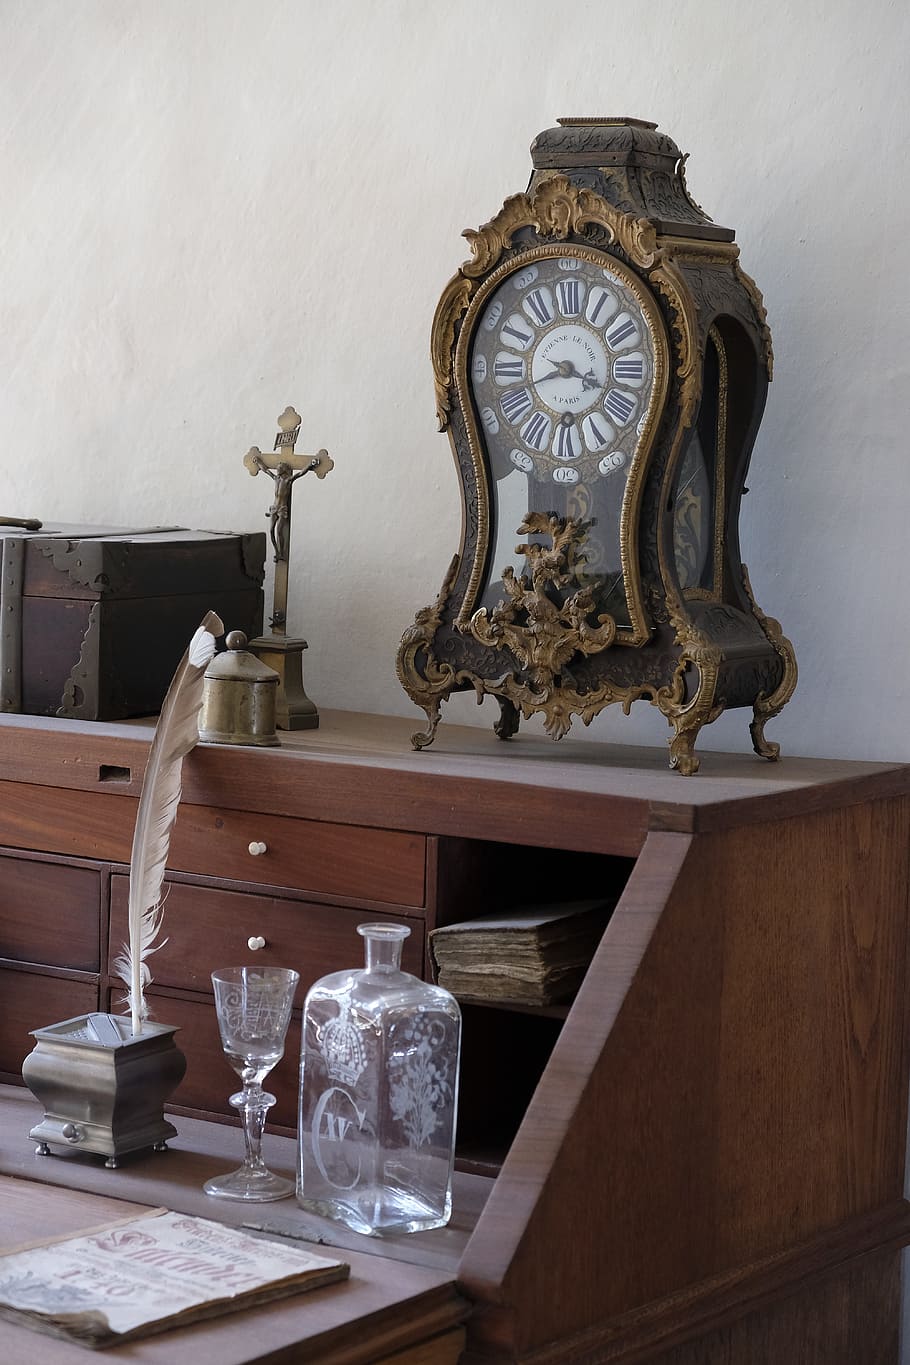 jam analog, kayu, meja, jam, jam kakek, jam pendulum, jam meja, waktu, lama, dekoratif